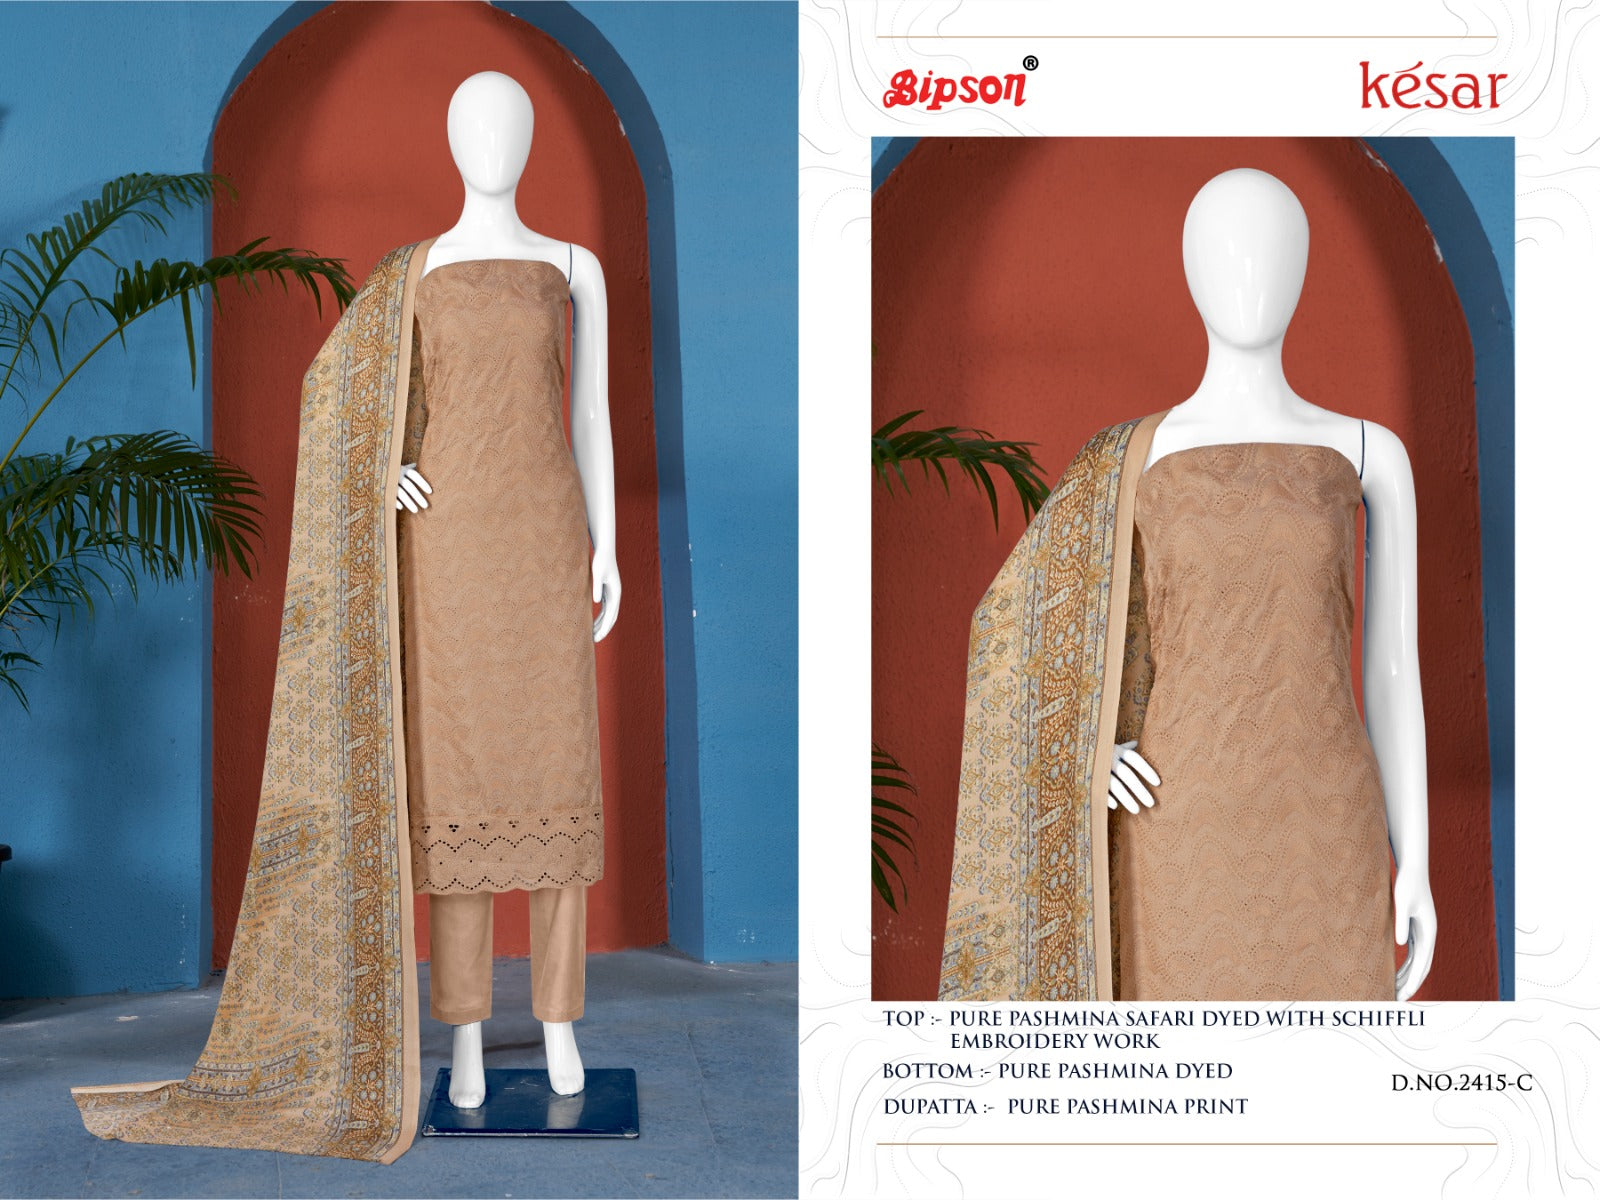 Kesar-2415 Bipson Prints Woolen Pashmina Suits